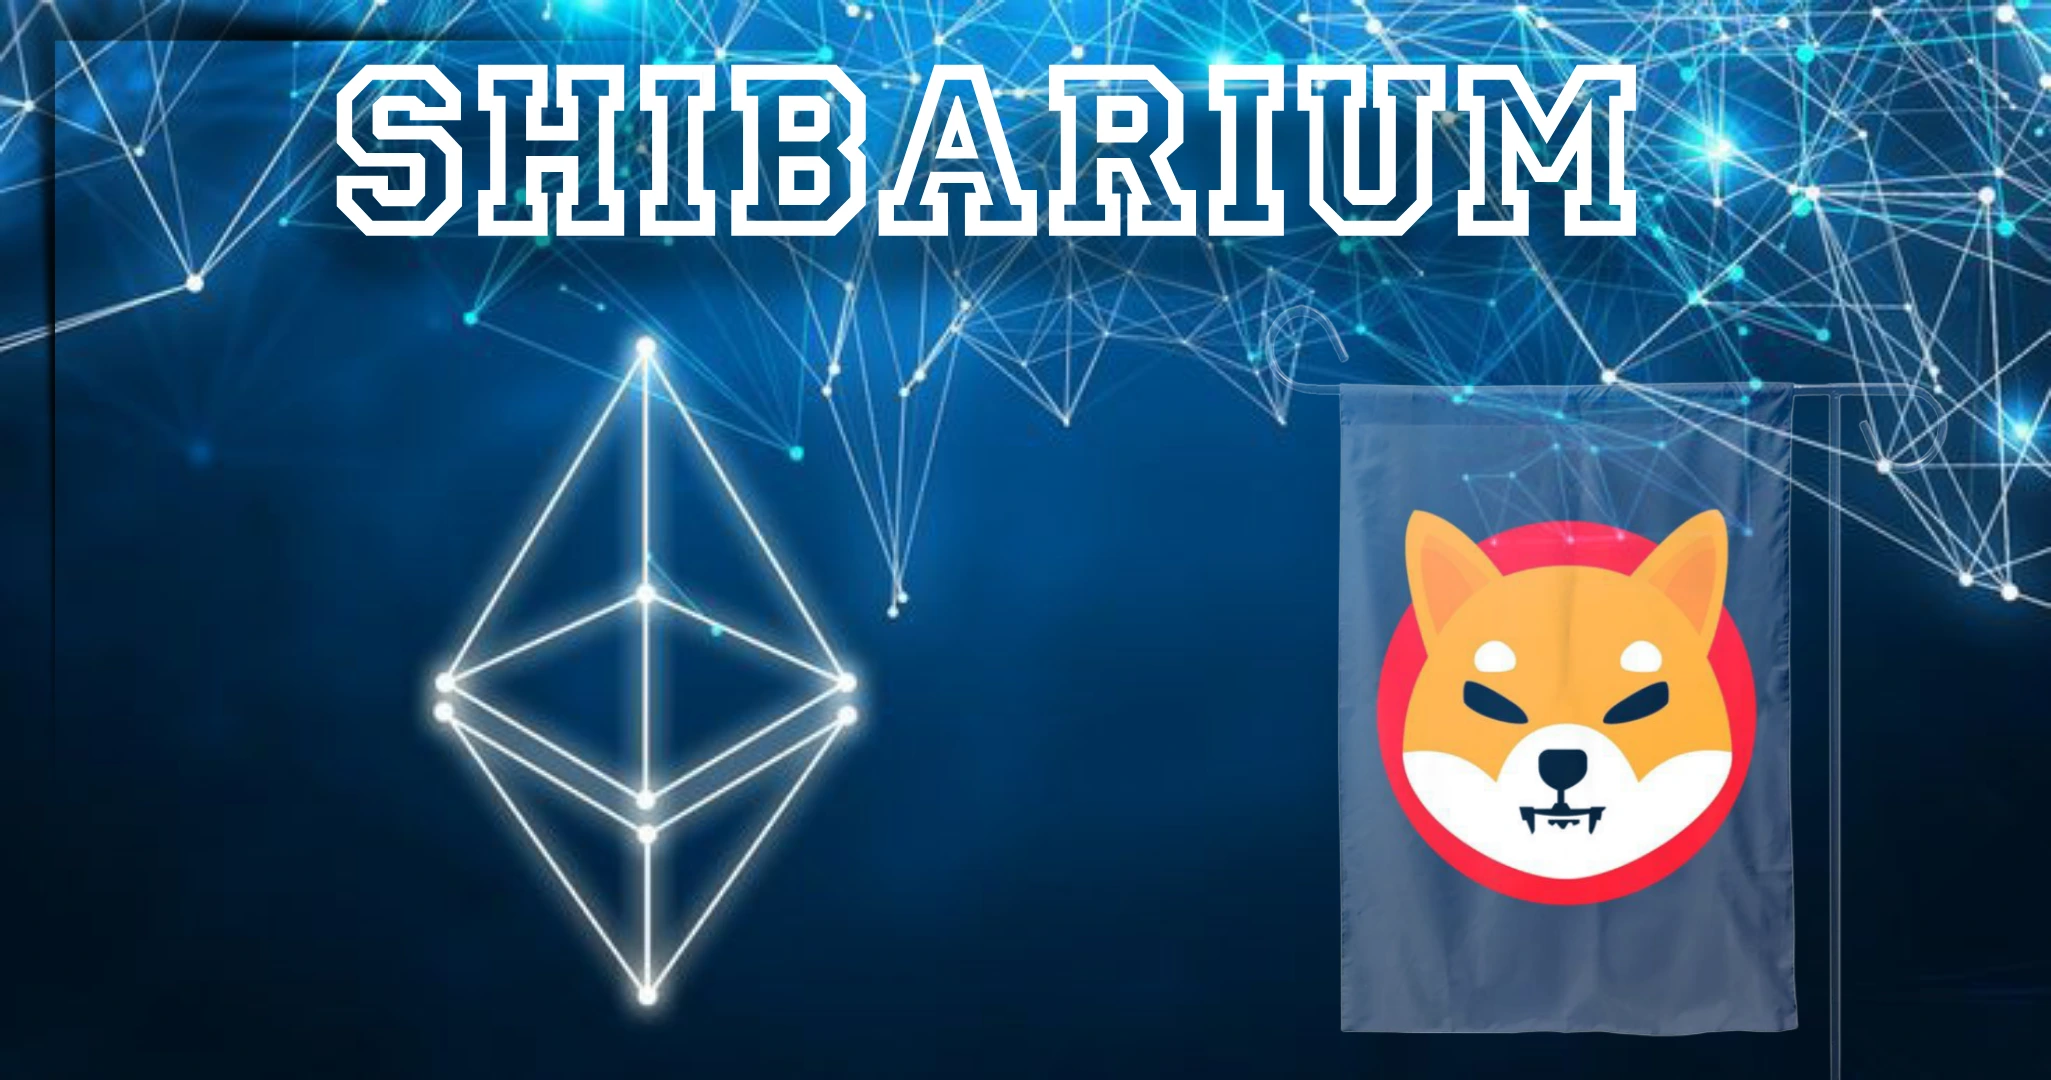 Shibarium Crypto news